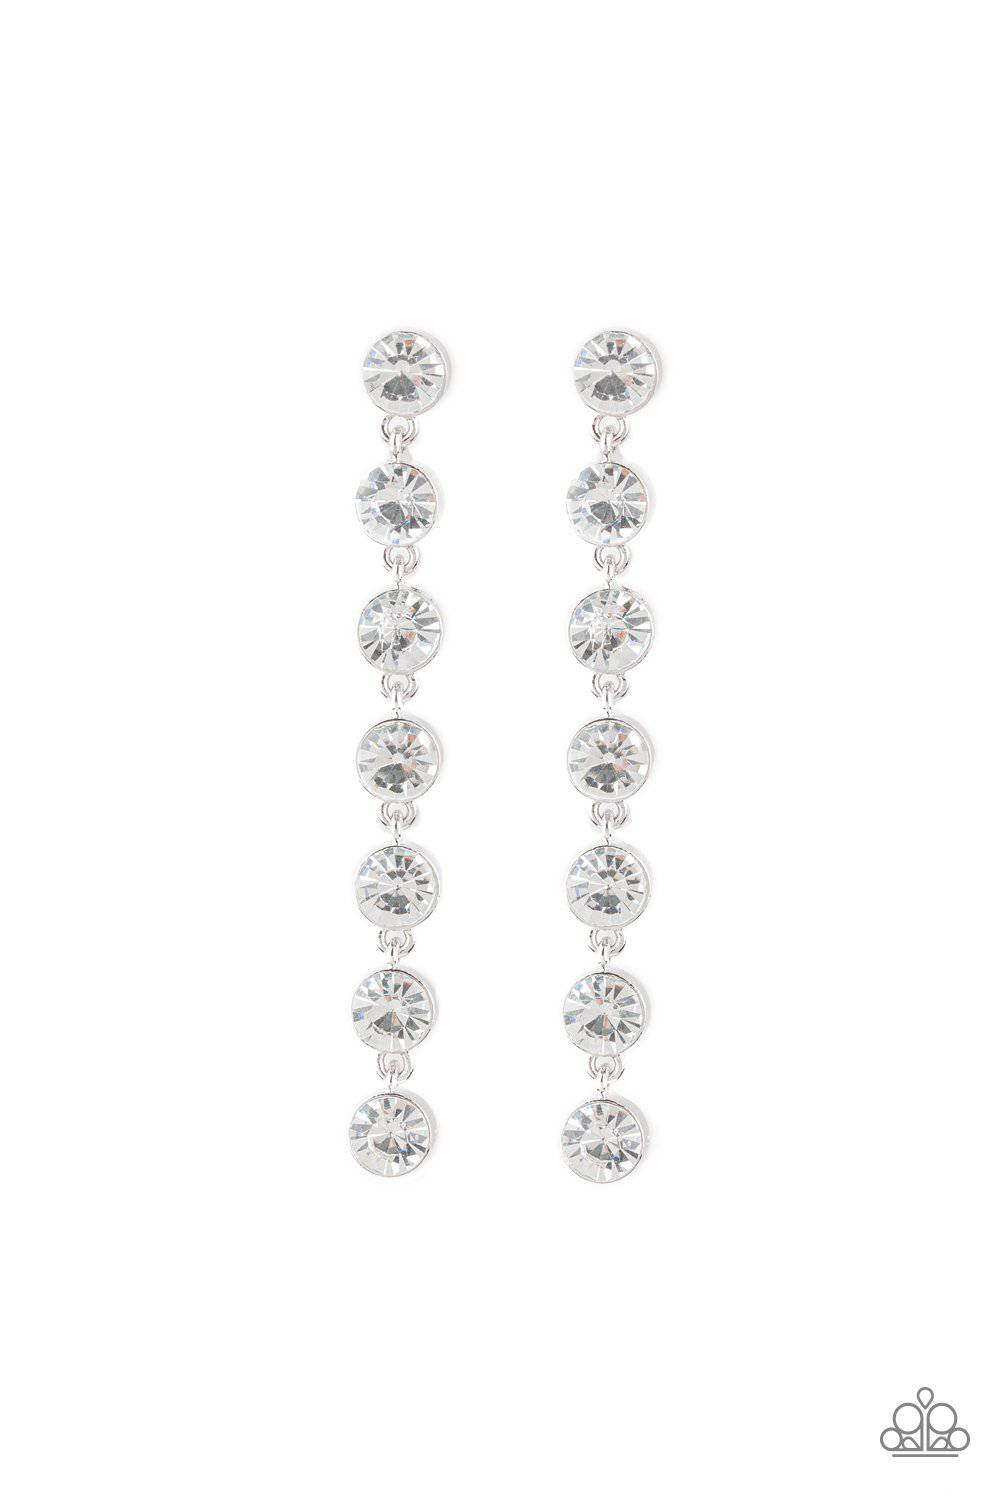 D225 - Dazzling Debonair White Earrings by Paparazzi Accessories on Fancy5Fashion.com